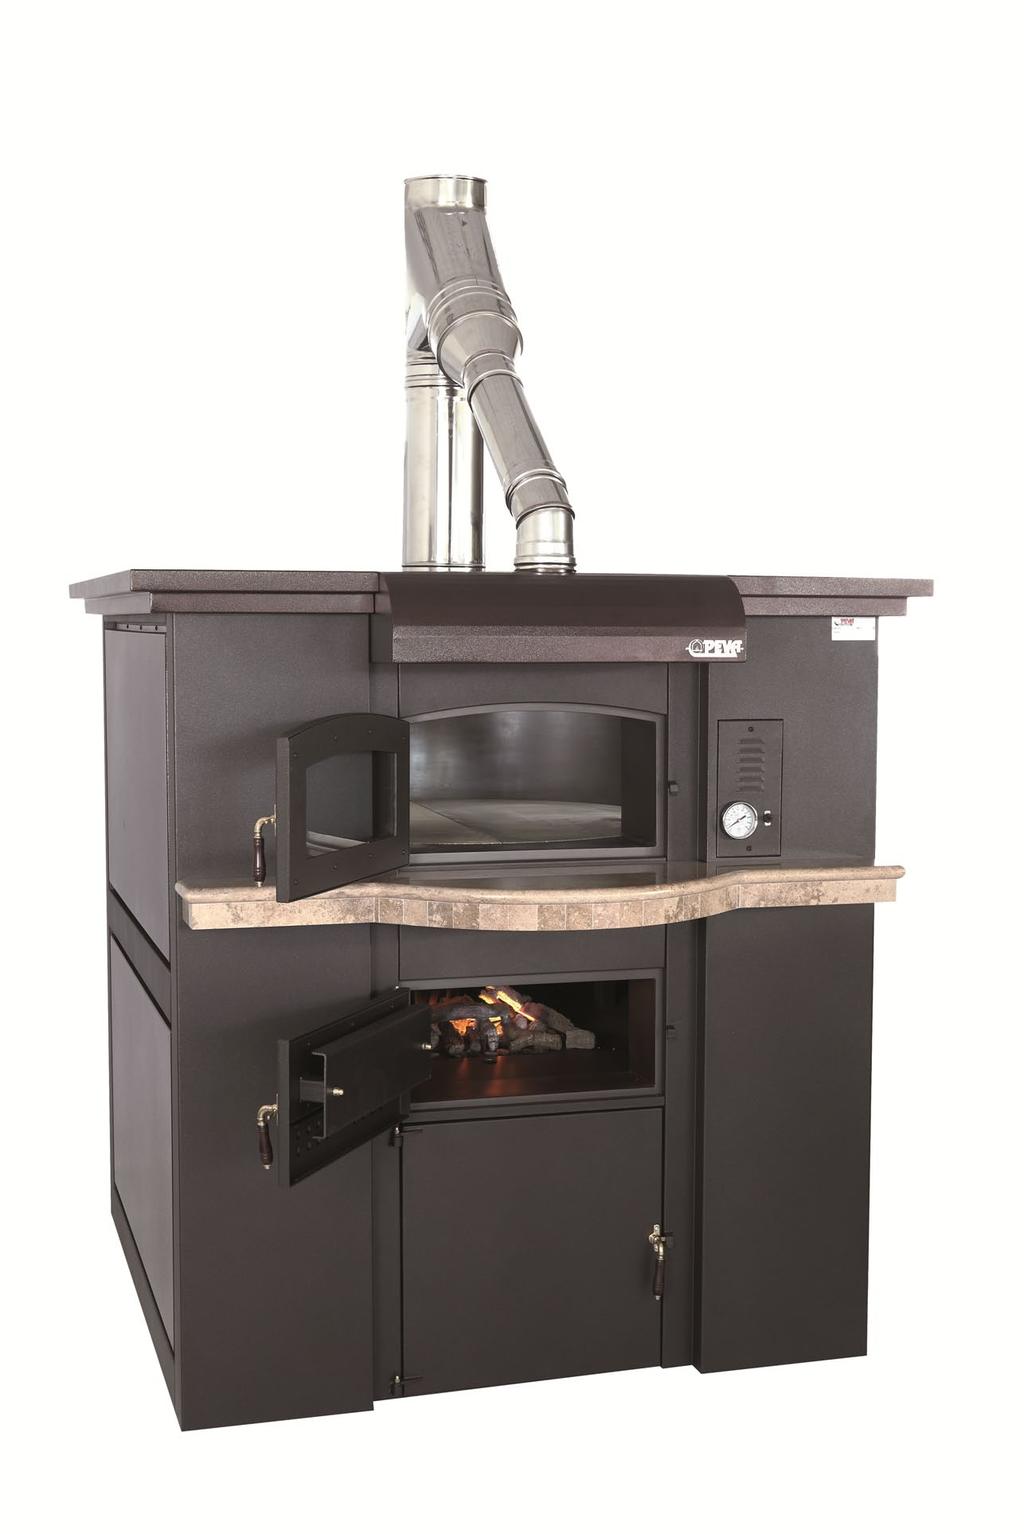 WOOD-BURNING OVENS - PROFESSIONAL LINE OVEN K60/1 Oven K60/1 Wood-burning oven with indirect combustion - one (1)